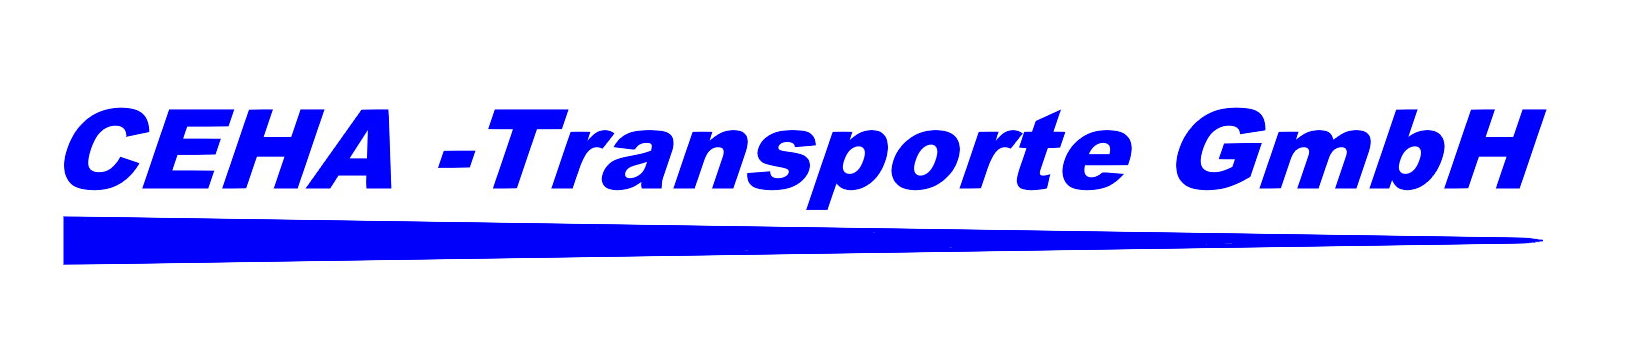 CeHa Transporte GmbH